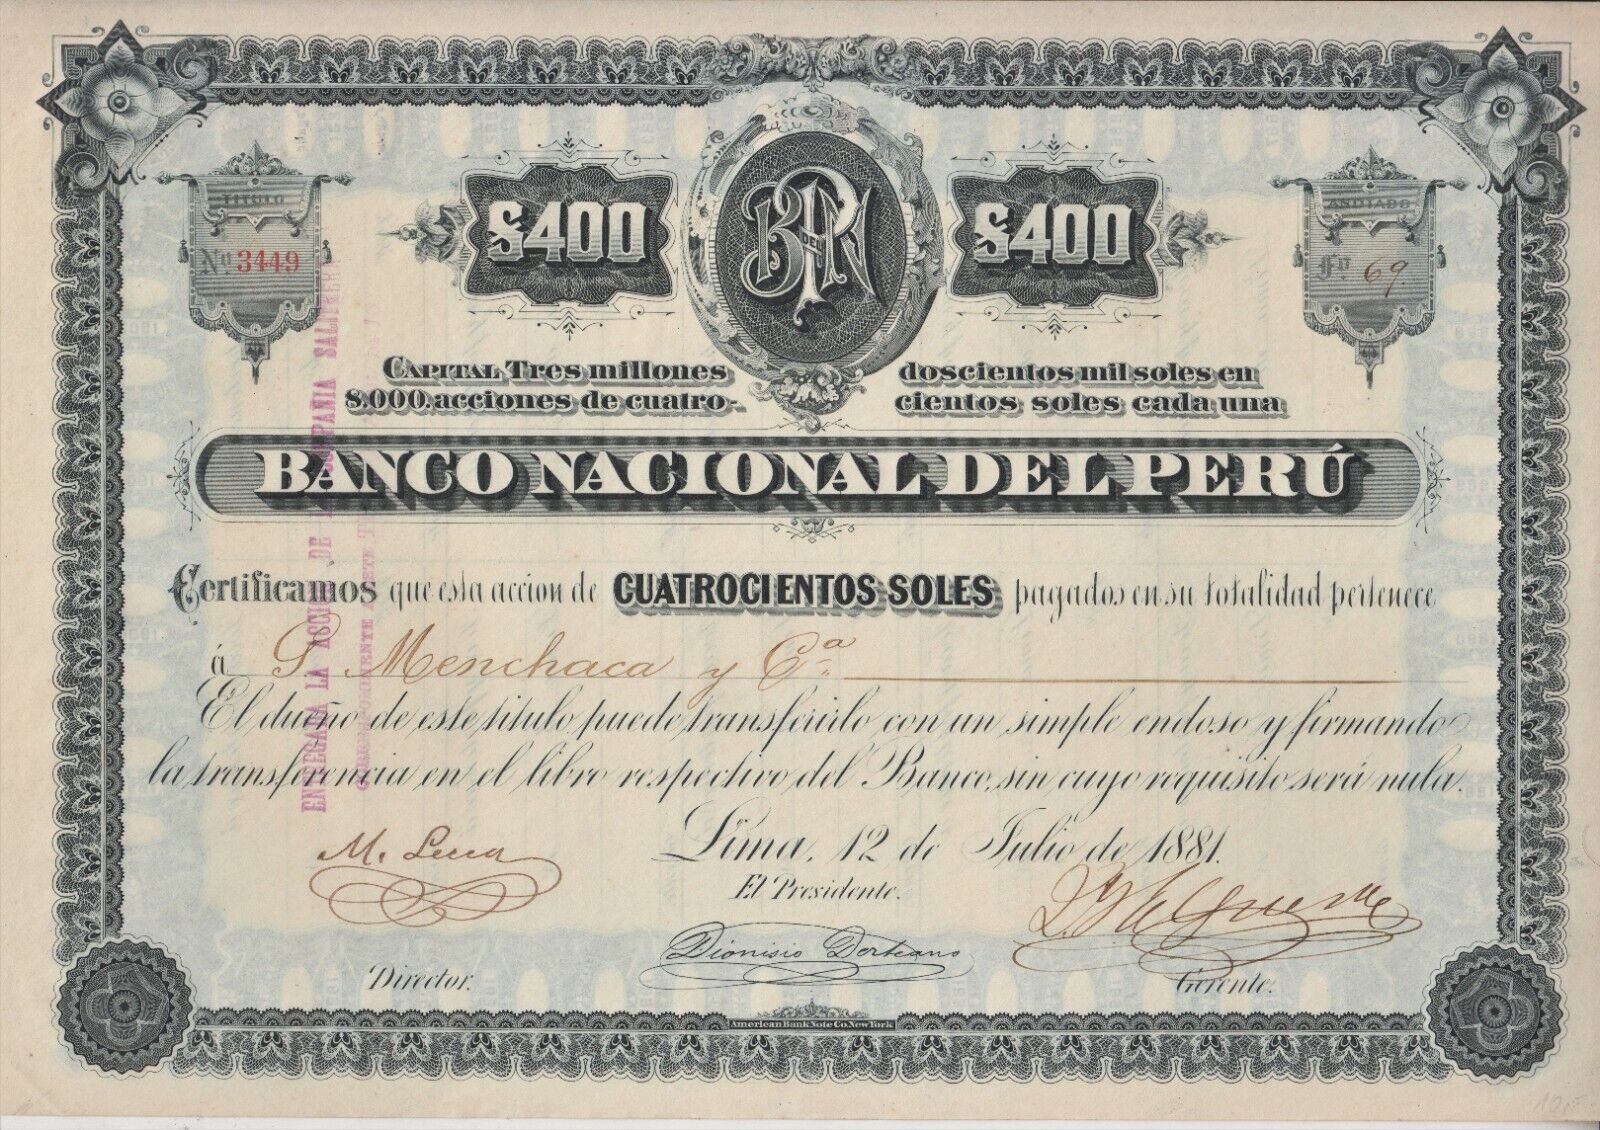 Peru 1881 Banco Nacional Perú 400 soles share certificate stock